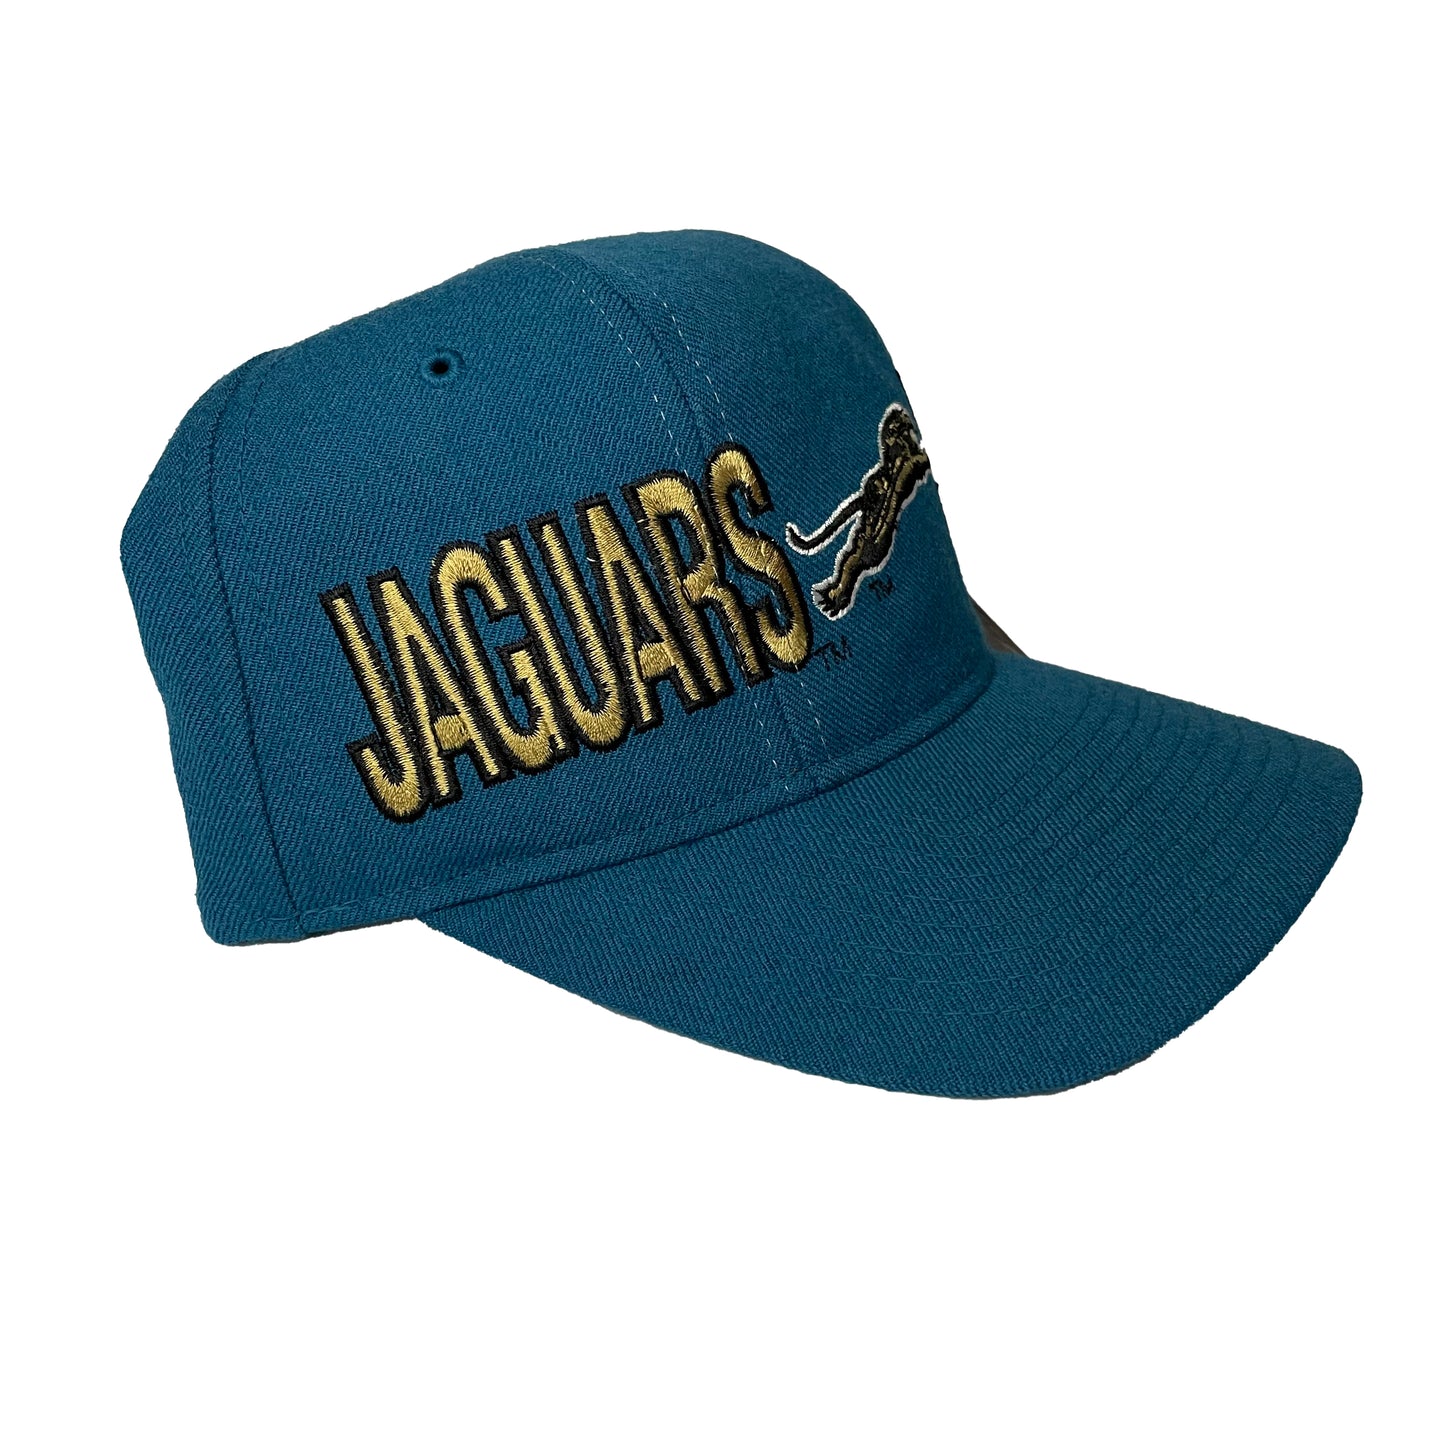 Jacksonville Jaguars banned logo DEADSTOCK hat